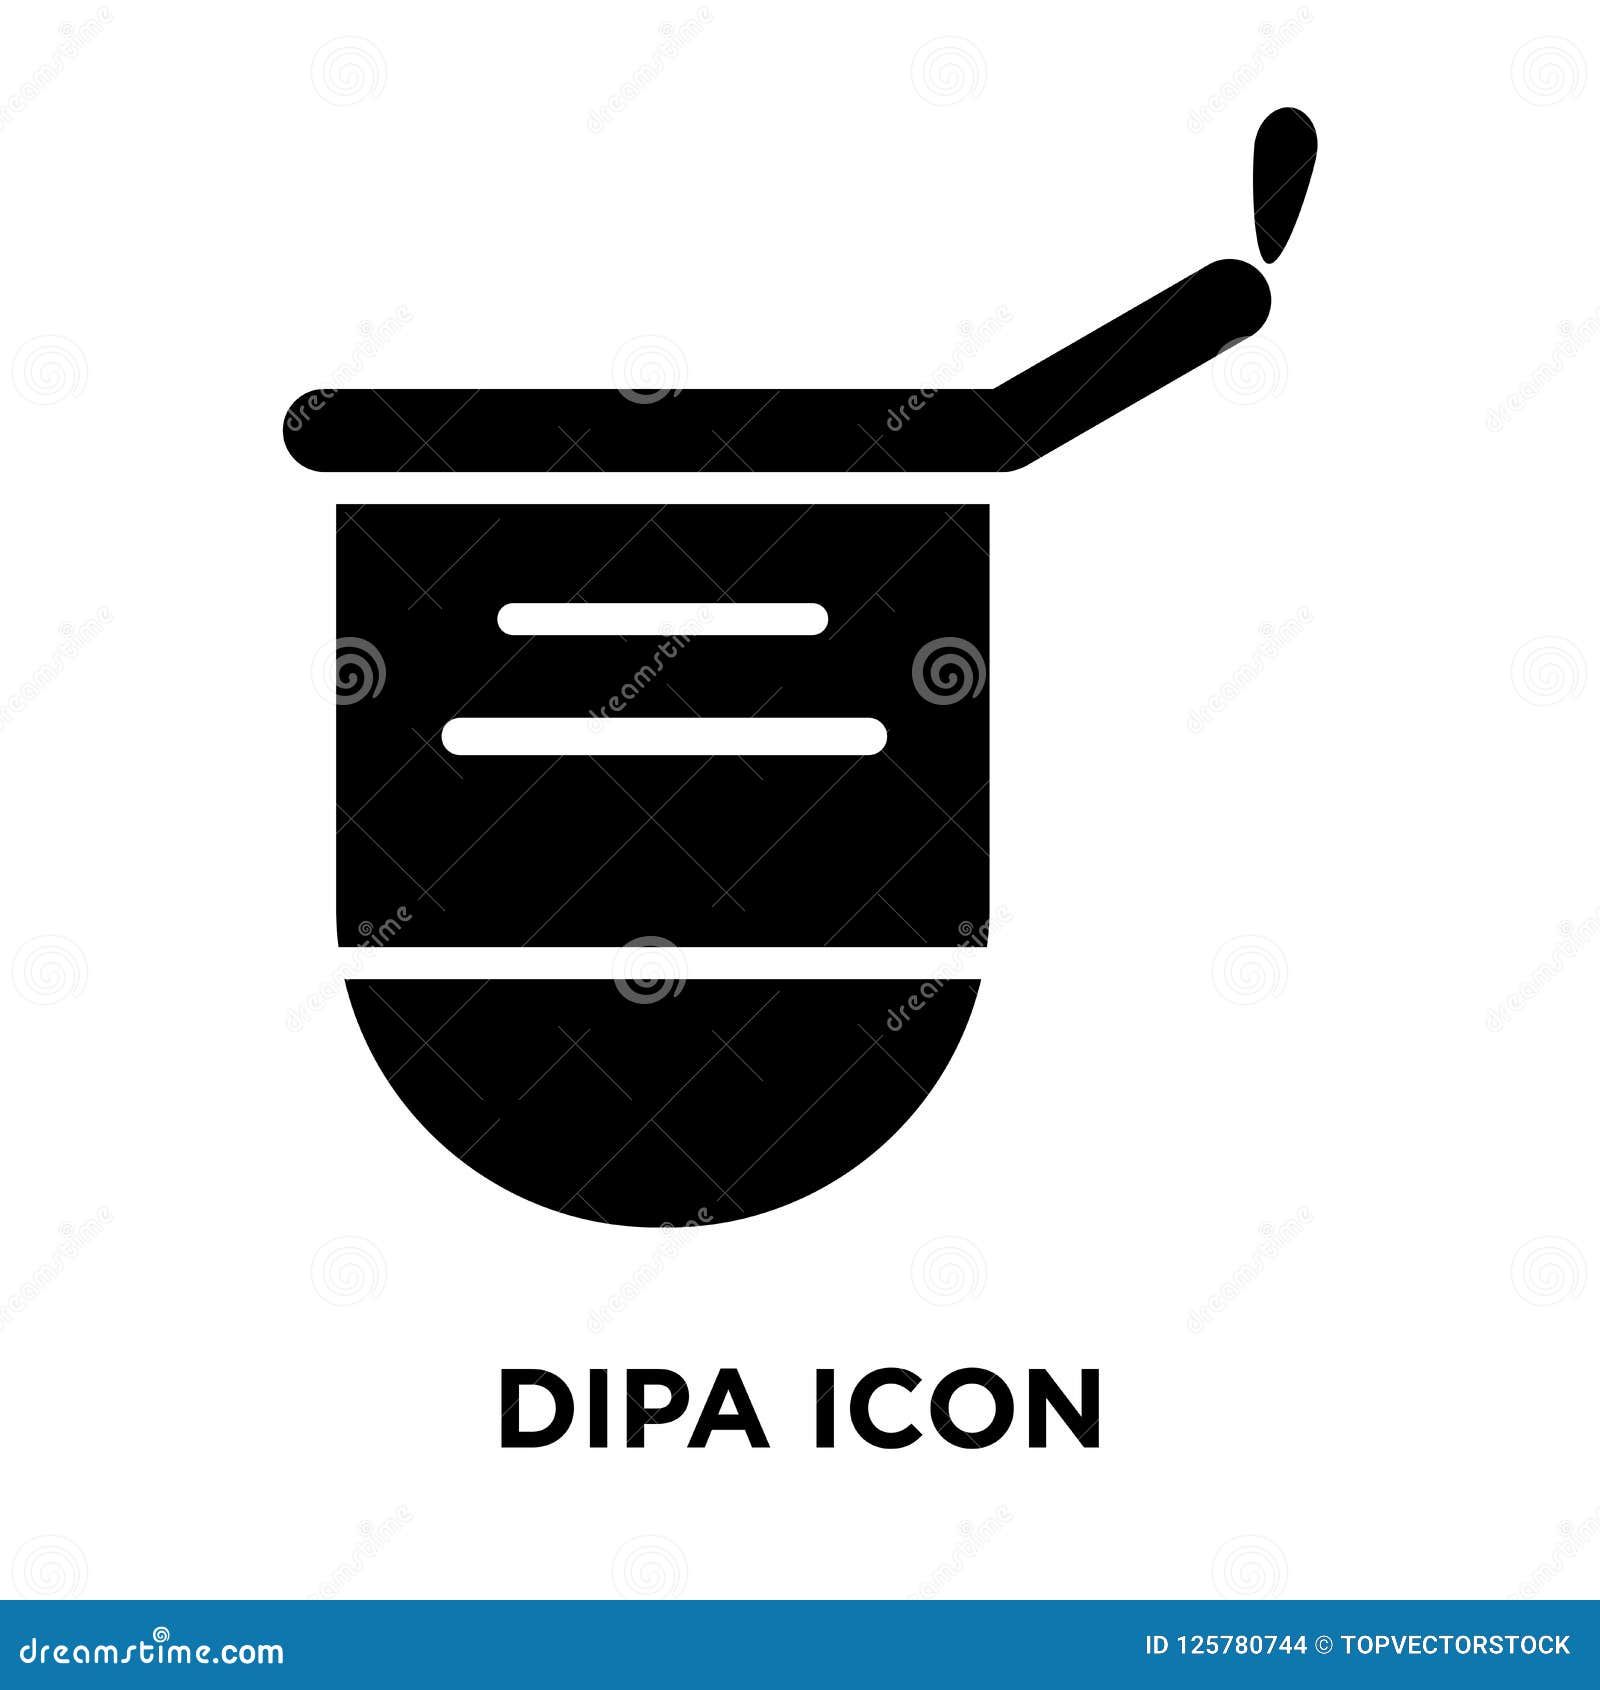 dipa icon   on white background, logo concept of d